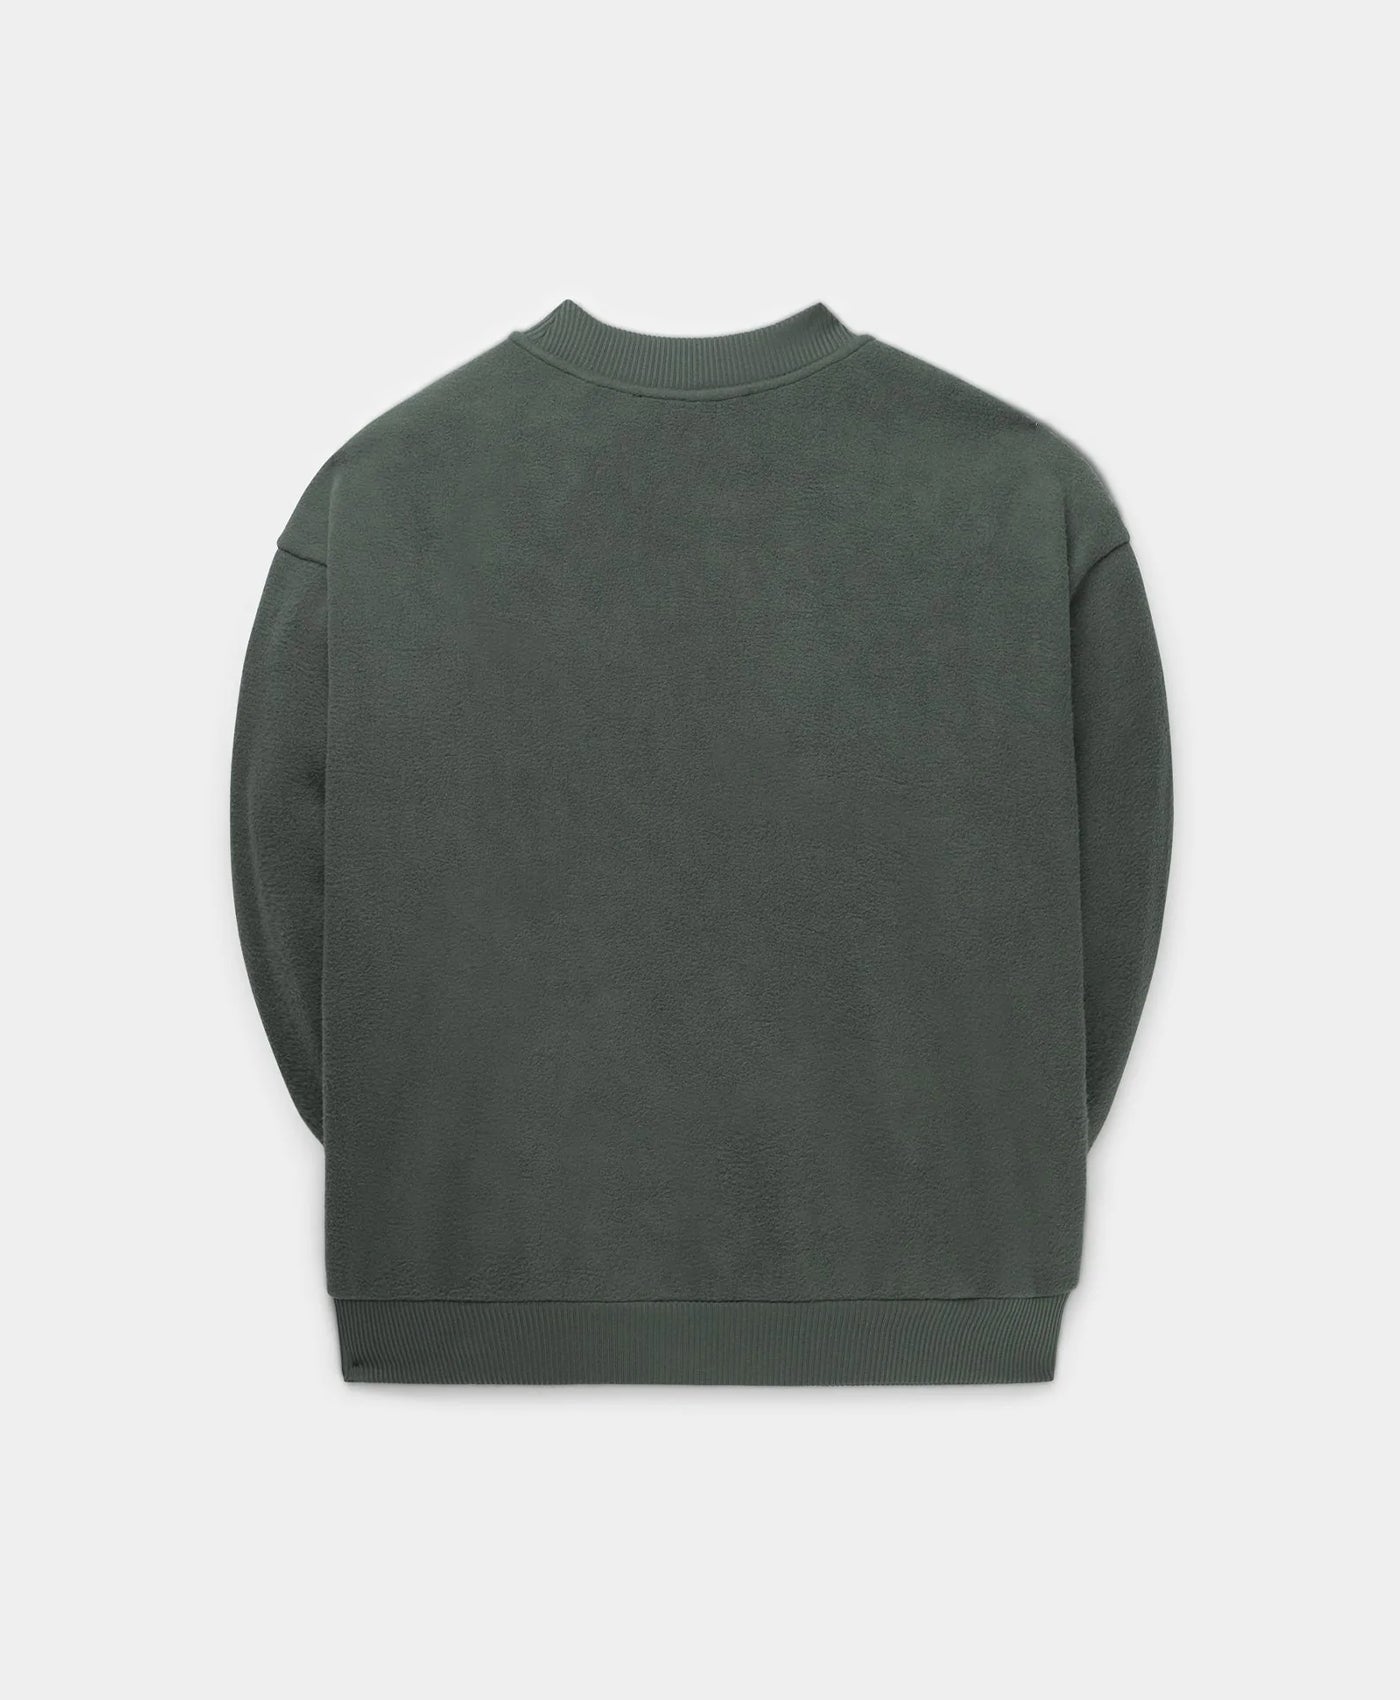 DP - Chic Green Nadifa Sweater - Packshot - Rear